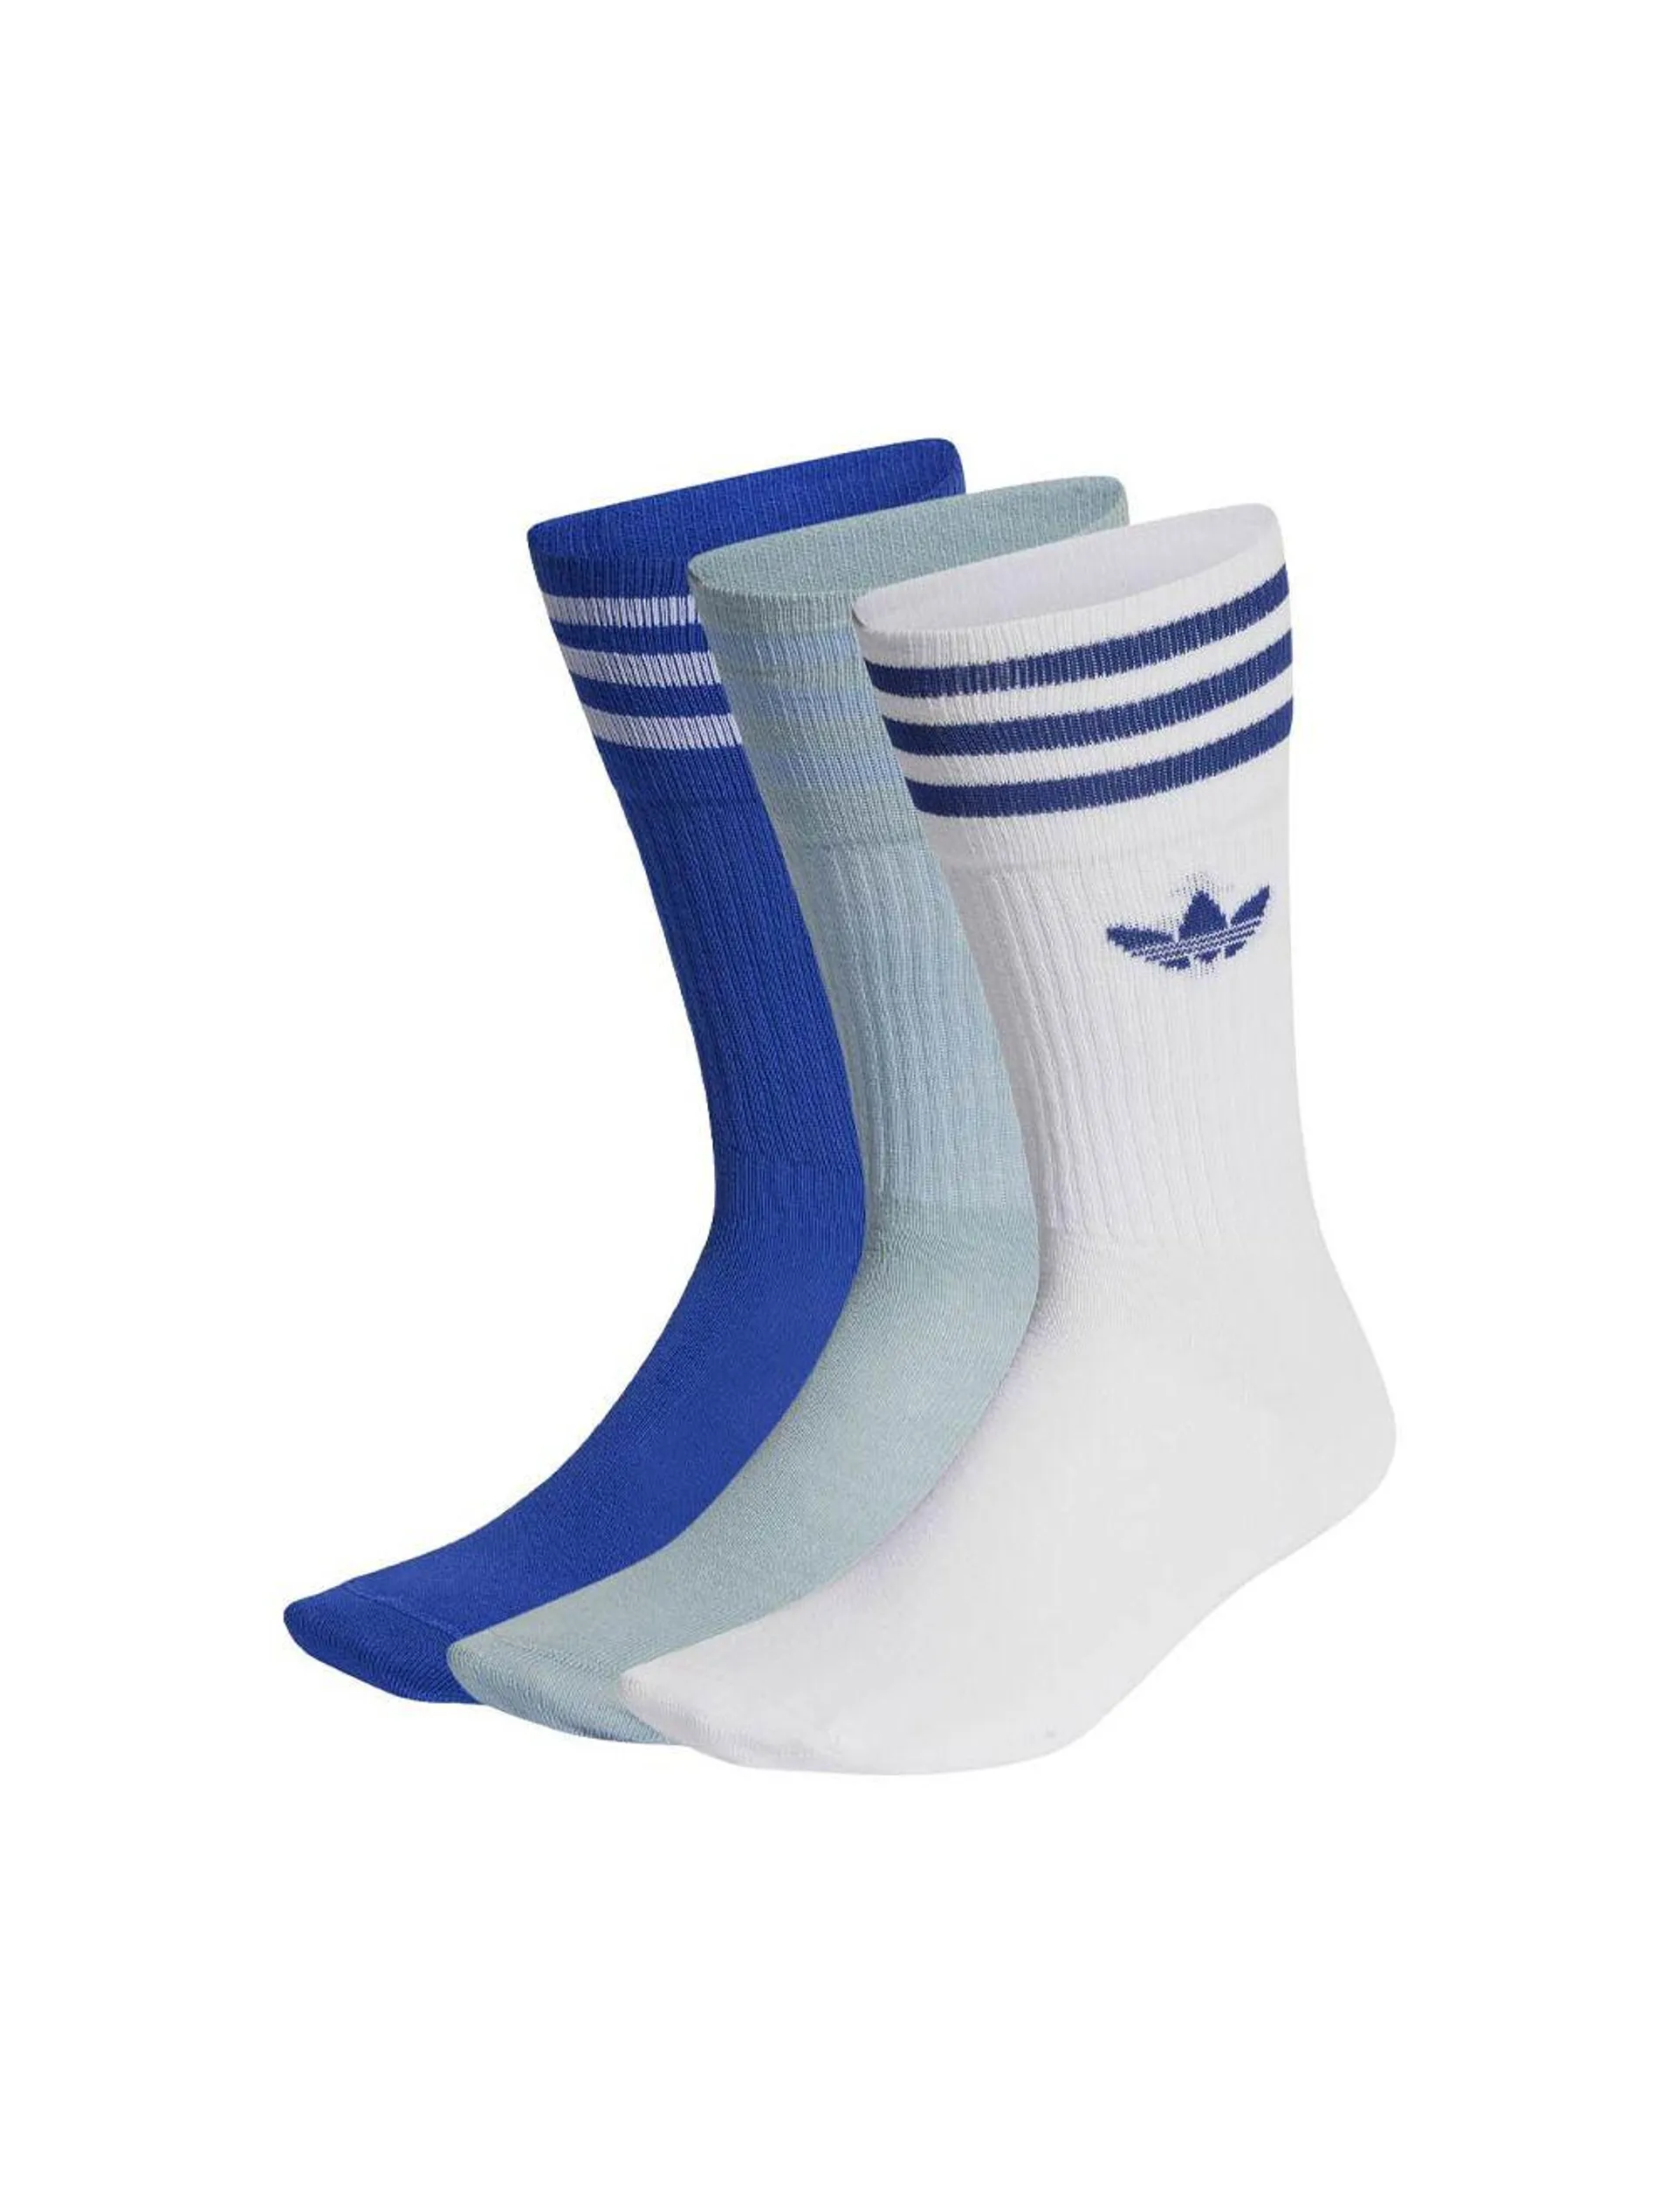 adidas Originals Solid Crew 3 Pack Socks White Blue